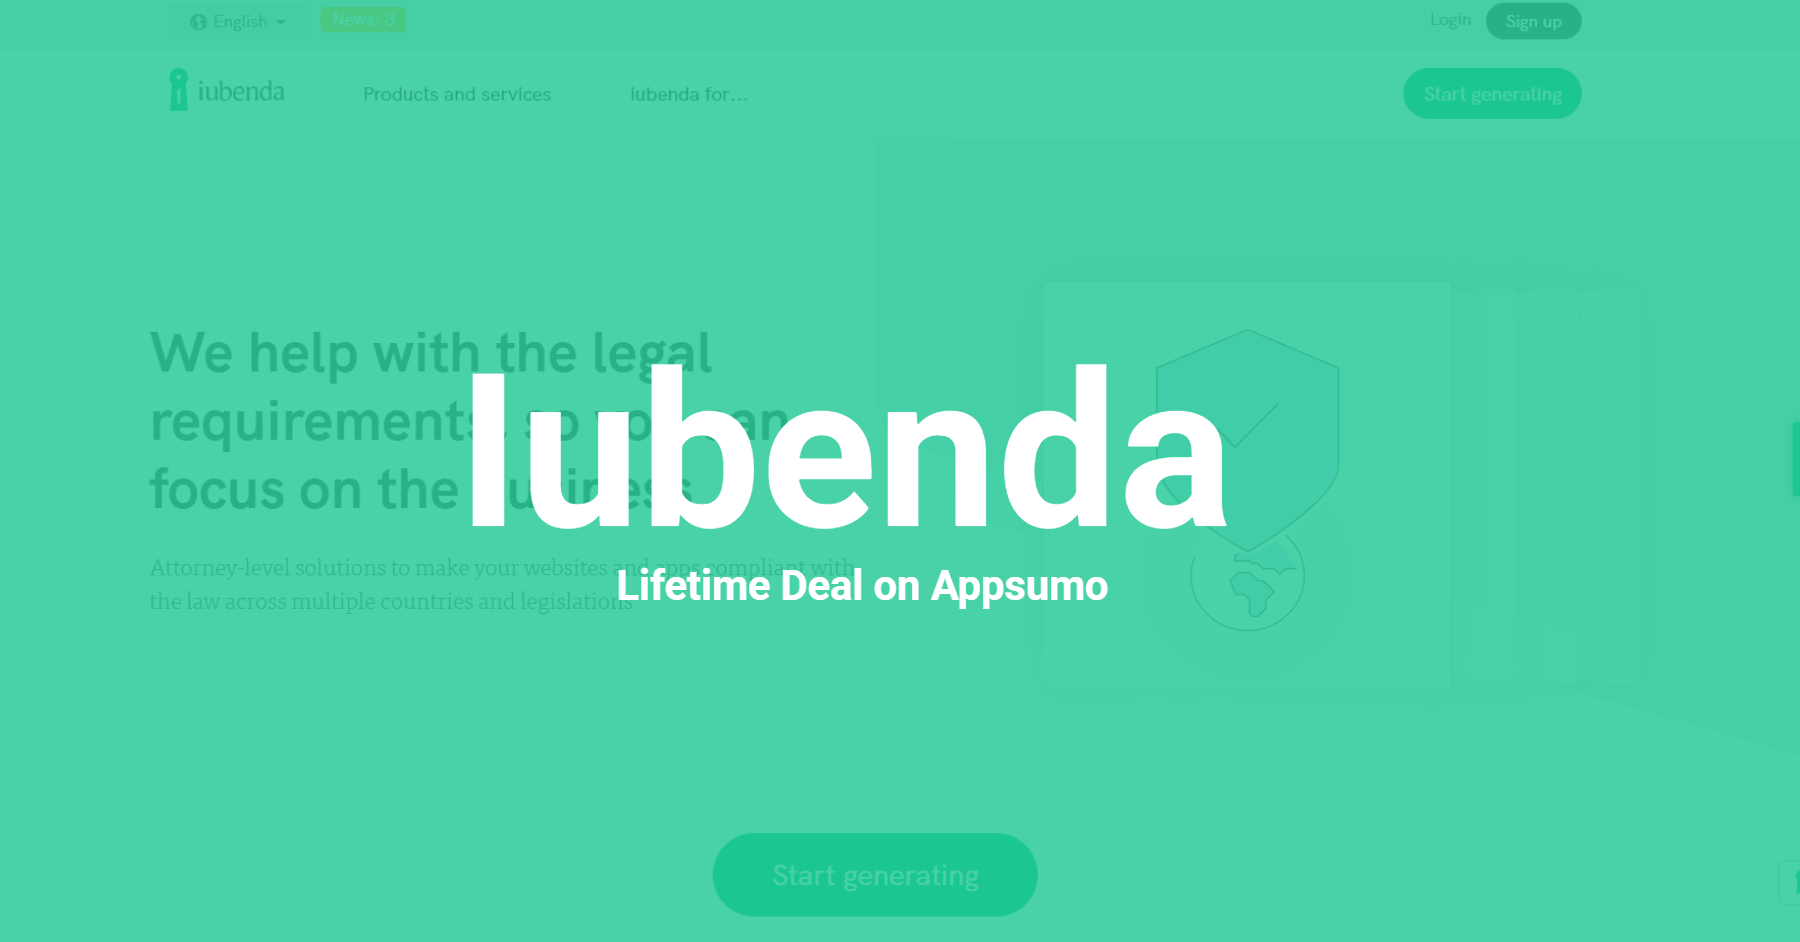 Iubenda – Keep Your Site Compliant